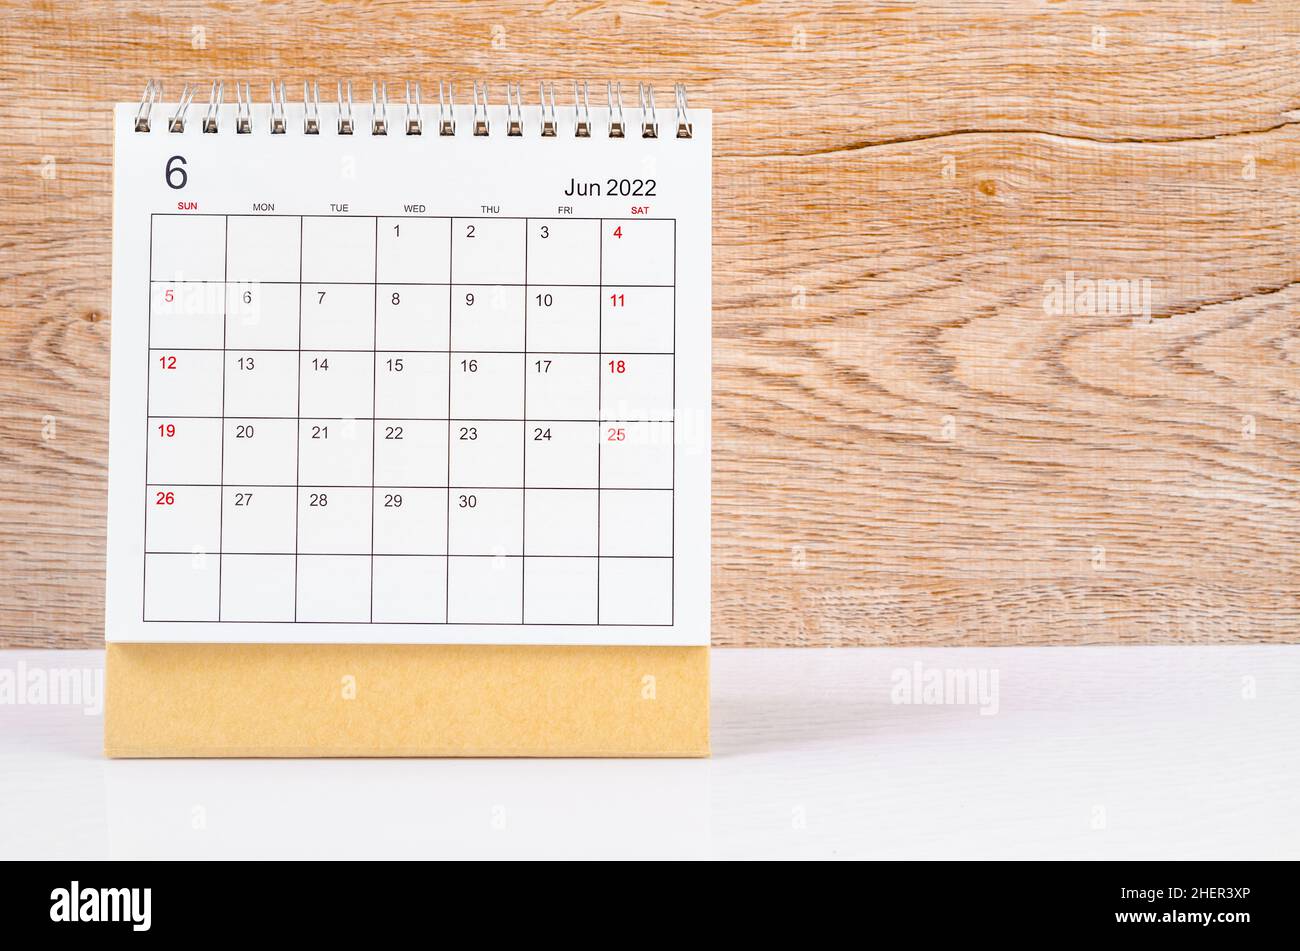 June 2022 Desktop Calendar The June 2022 Desk Calendar On Wooden Table Stock Photo - Alamy